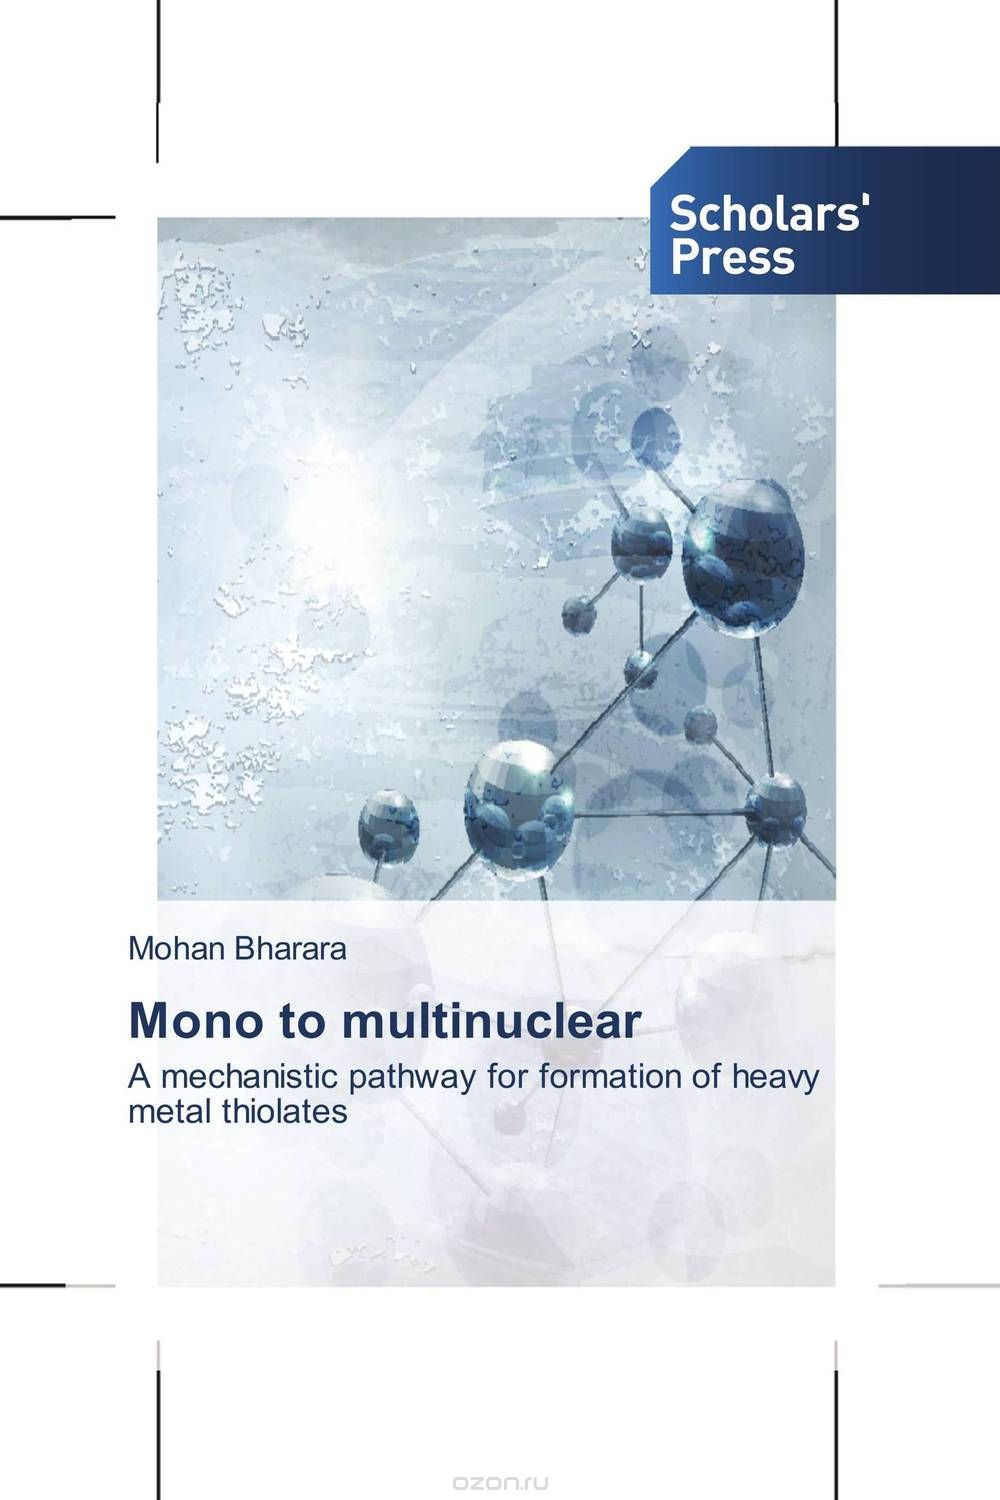 Скачать книгу "Mono to multinuclear"